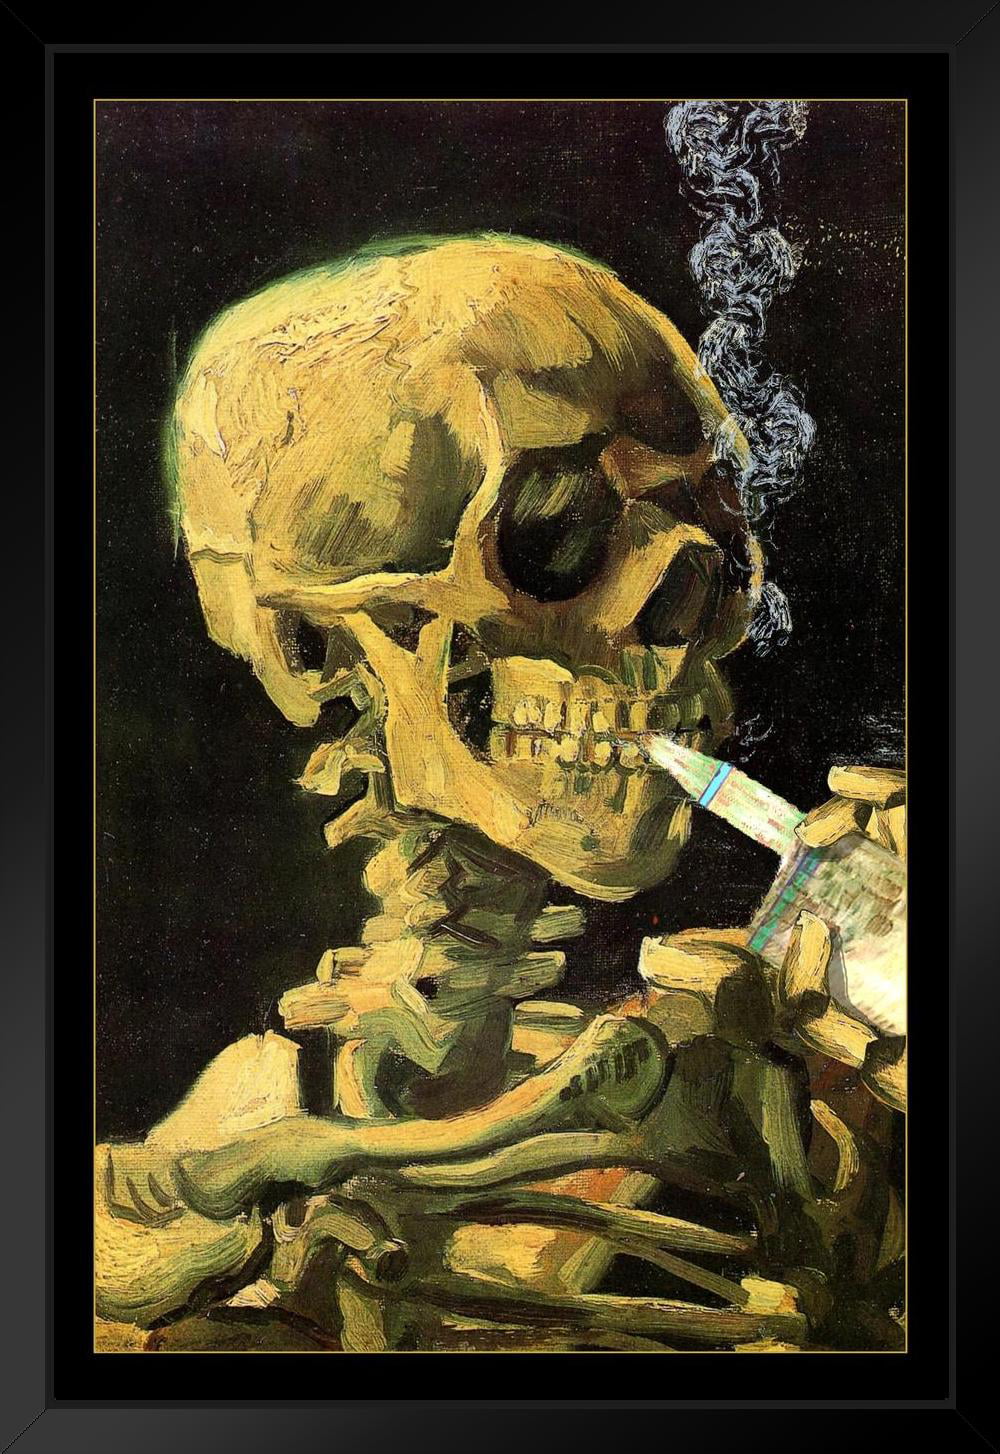 Vaping Skull Of Skeleton Vincent Van Gogh Painting Poster 1885 Burning  Cigarette Vincent Van Gogh Parody Funny Humor Cool Wall Decor Art Print  Poster 12x18 